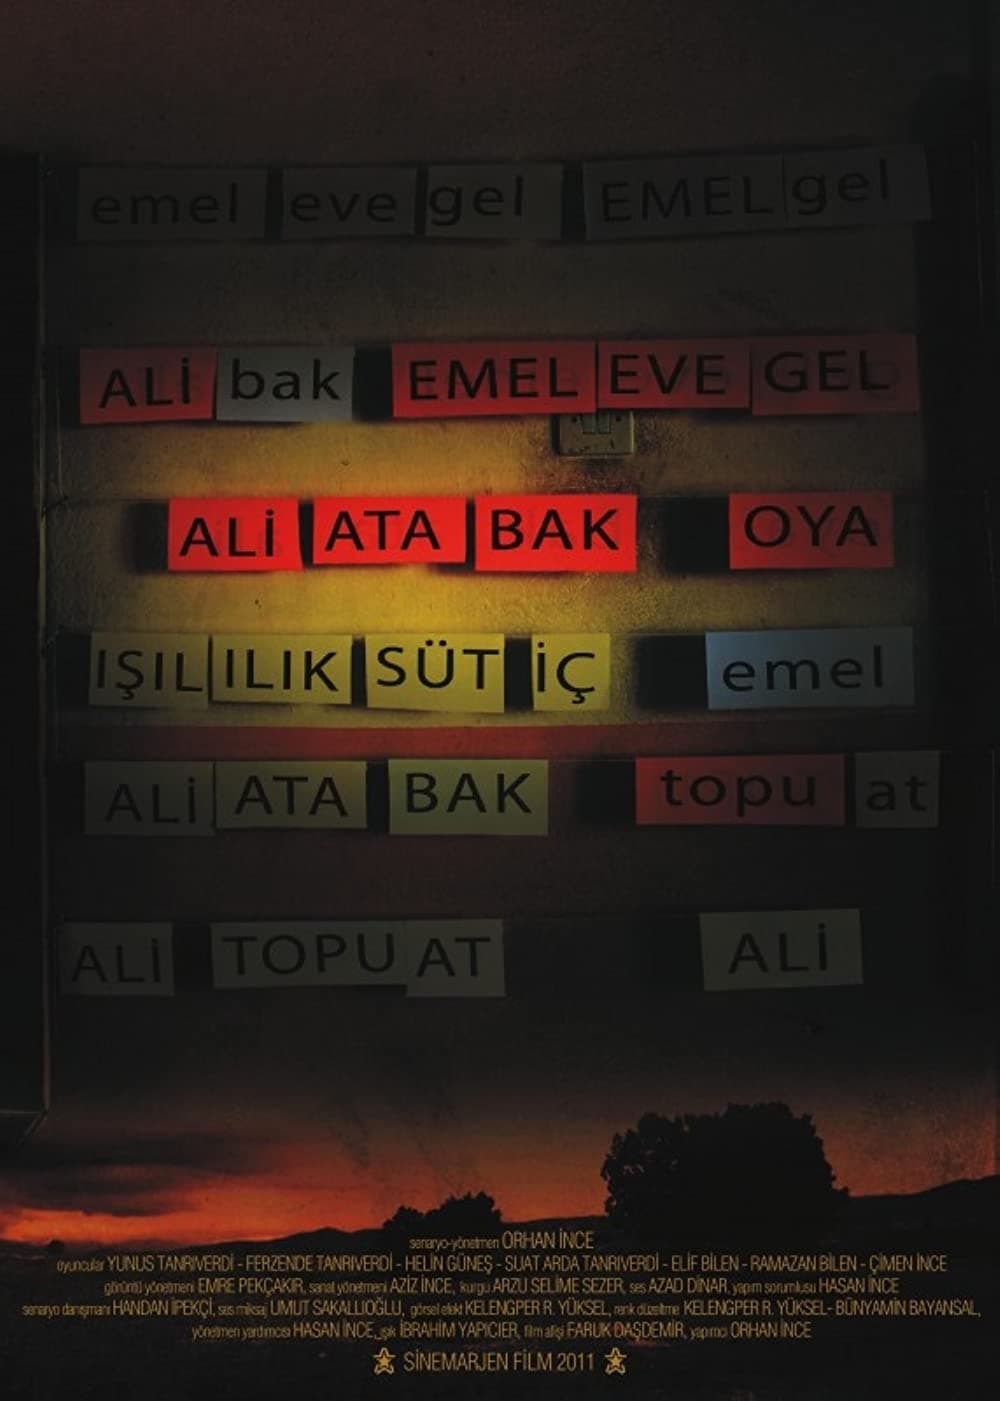 Ali Ata Bak